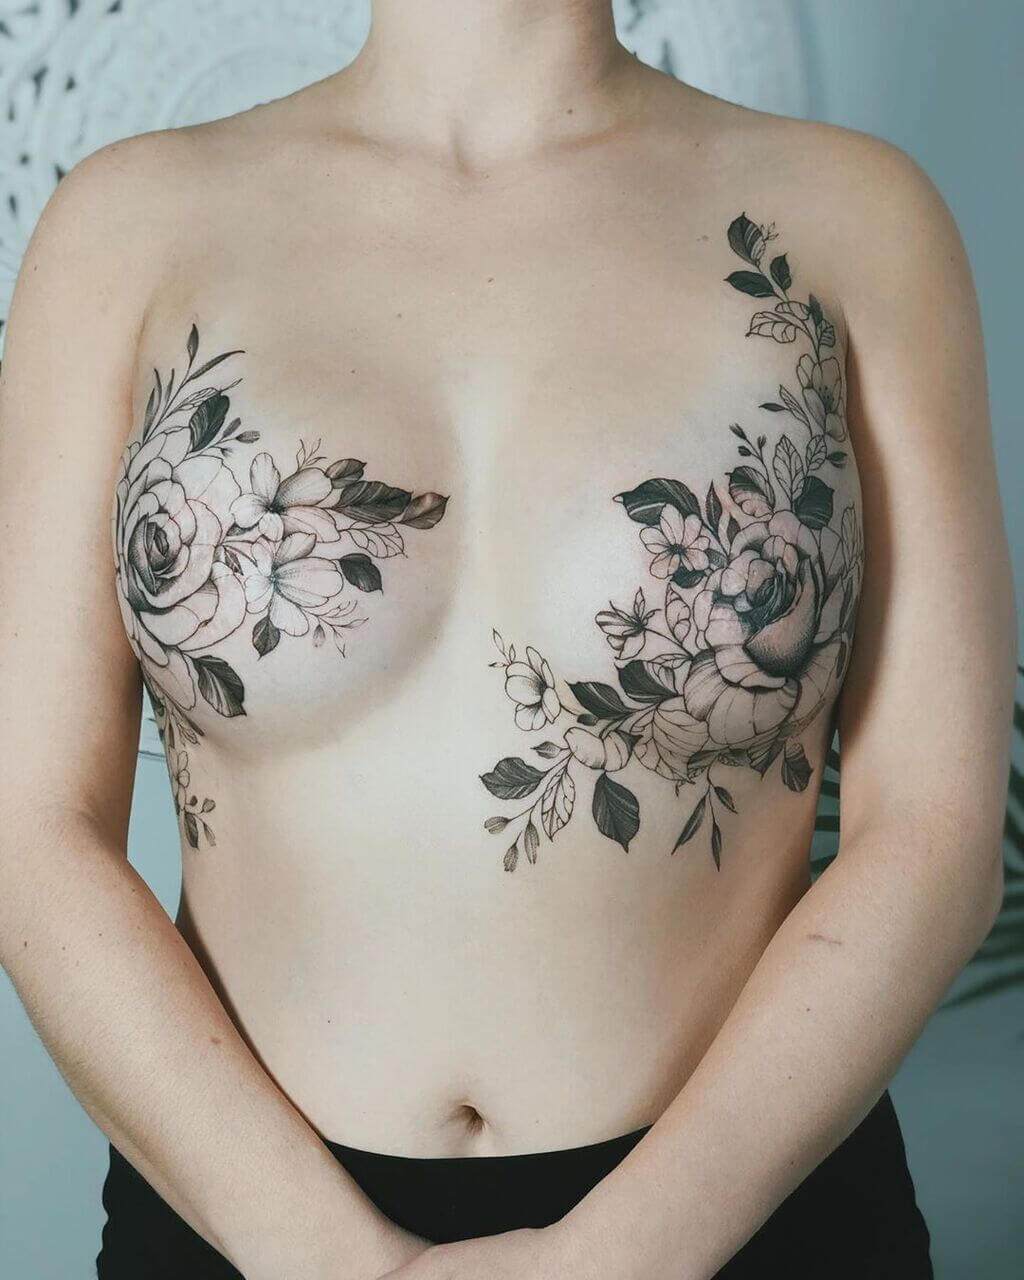 Flowery Breast Tattoos